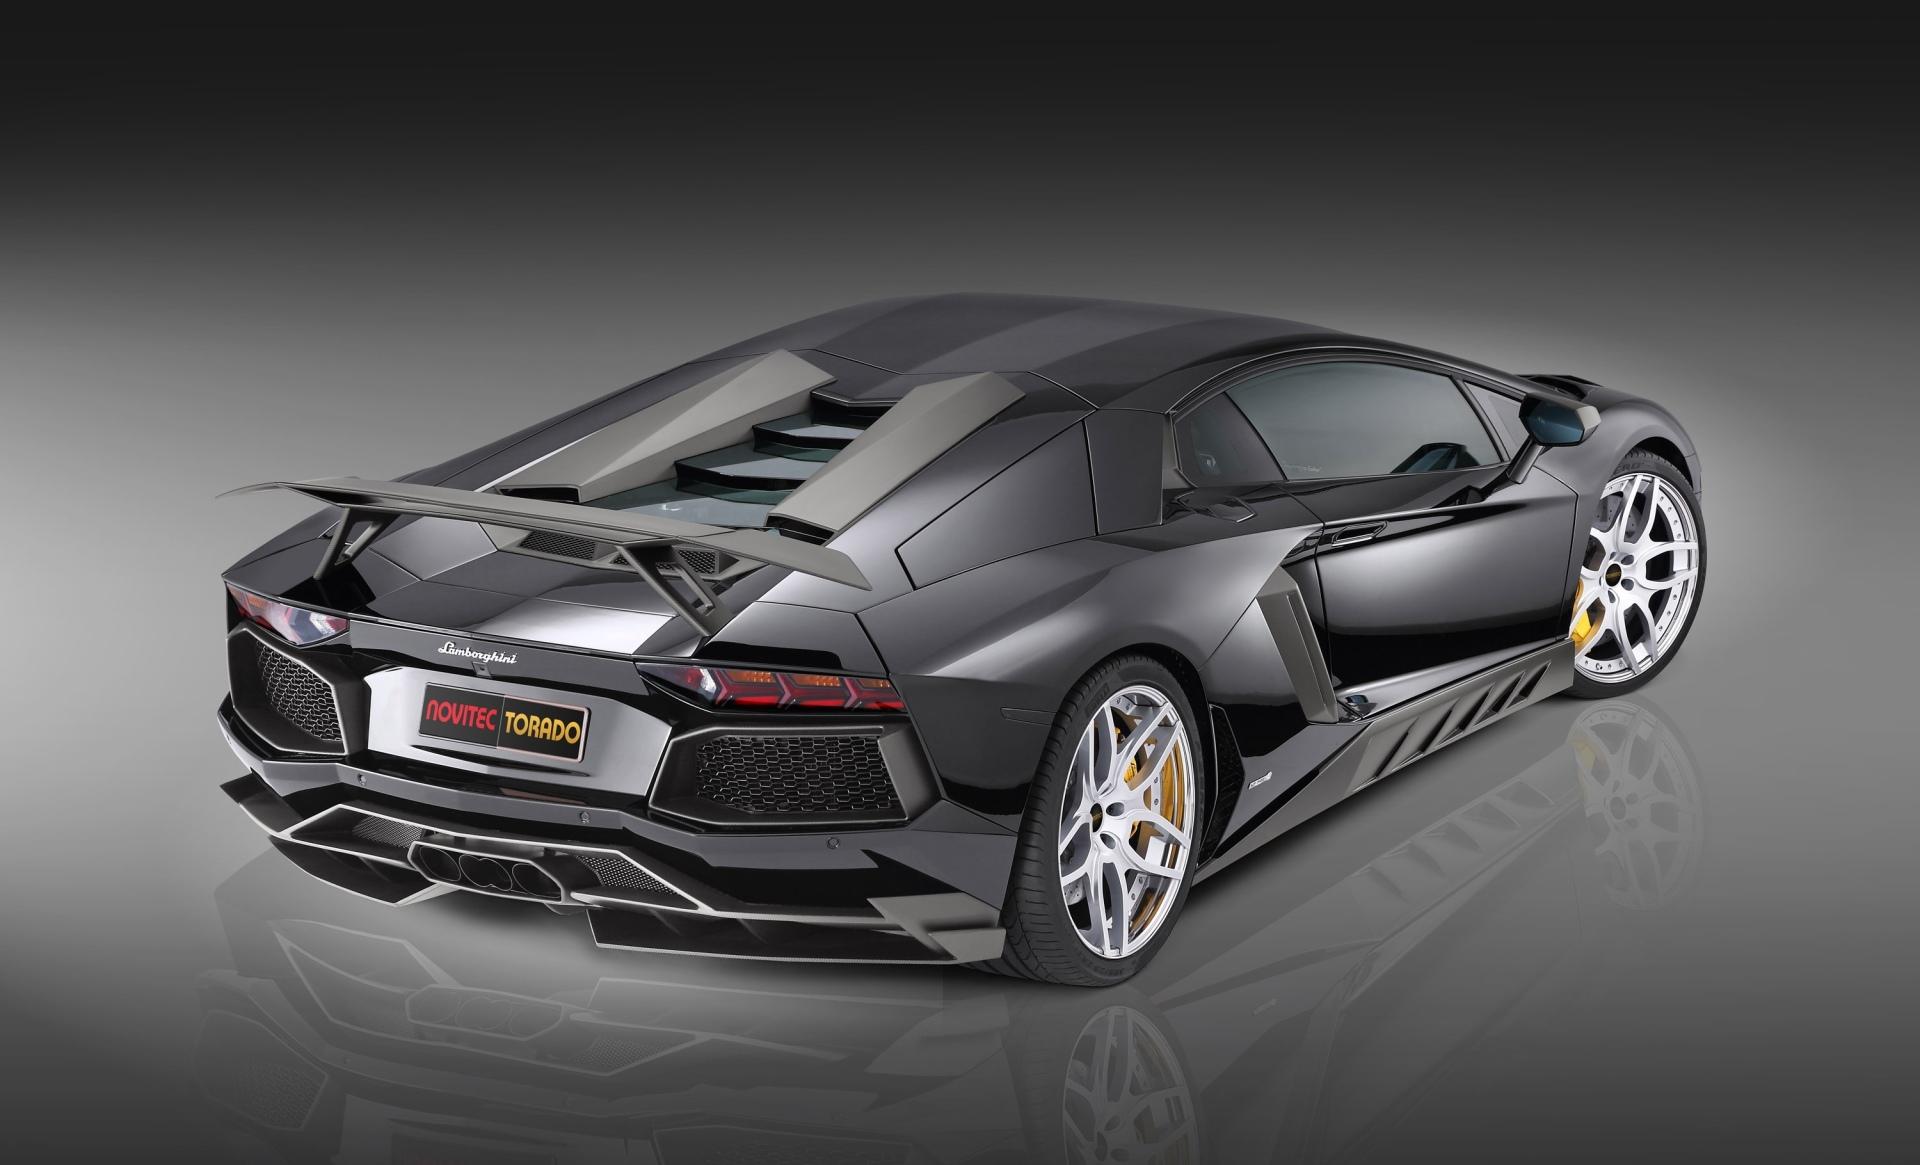 Lamborghini Novitec Torado at 640 x 960 iPhone 4 size wallpapers HD quality